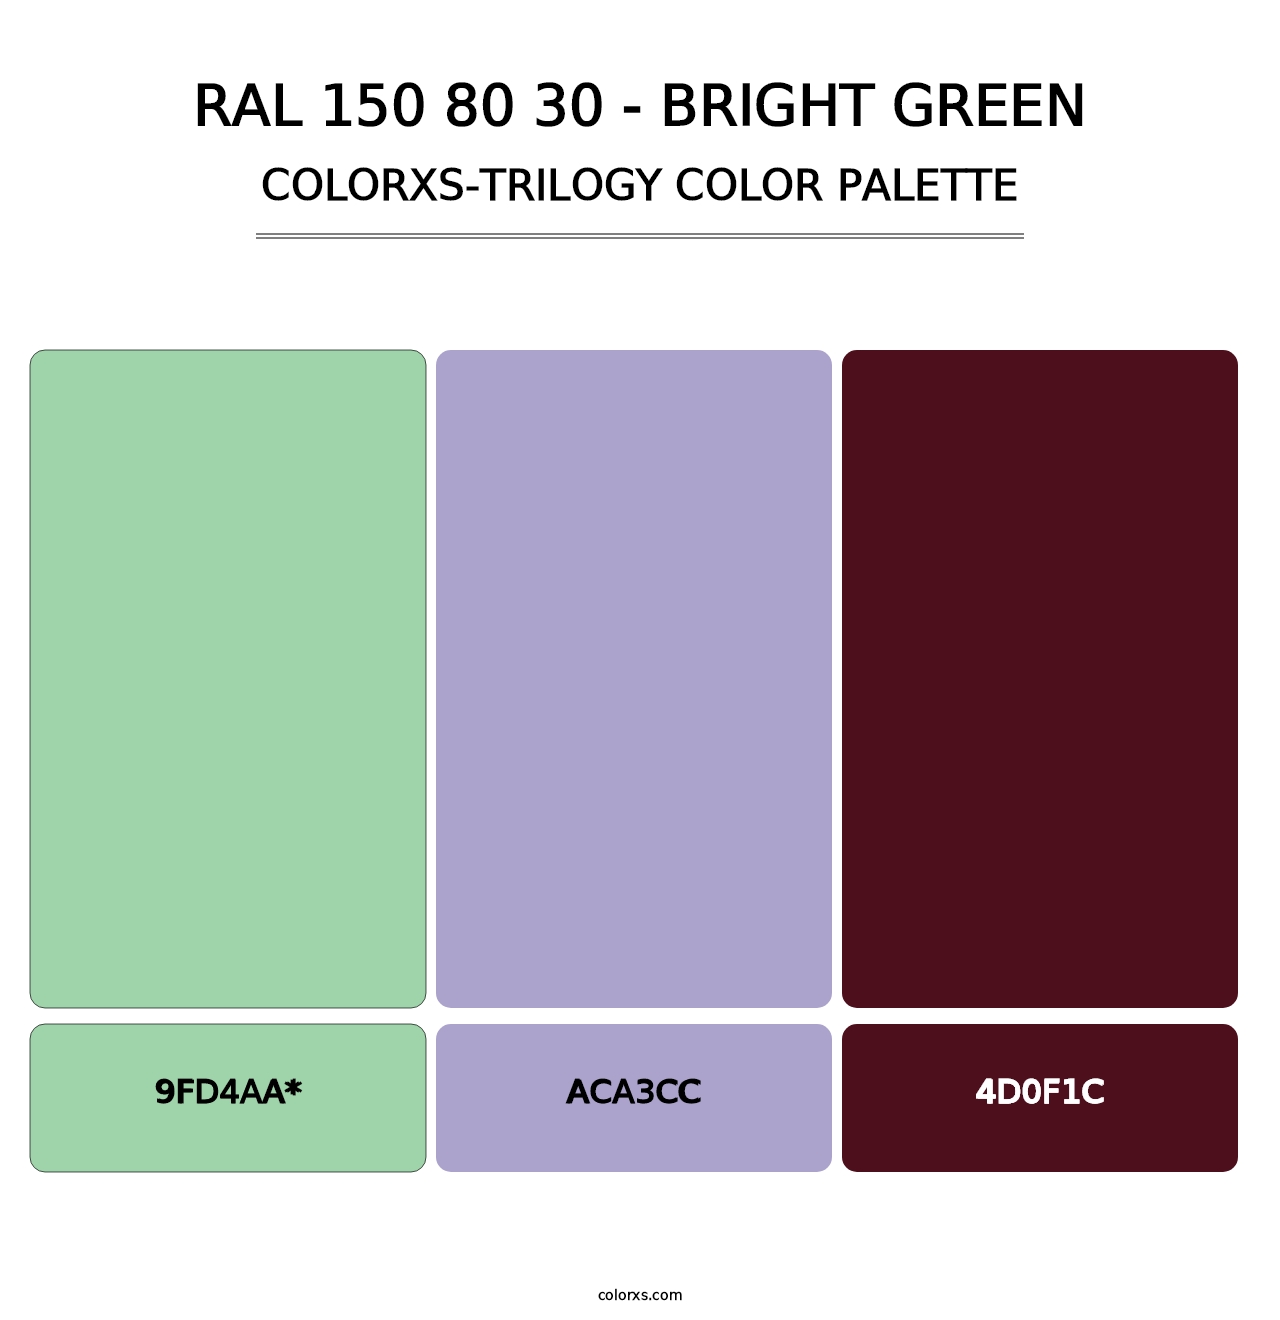 RAL 150 80 30 - Bright Green - Colorxs Trilogy Palette